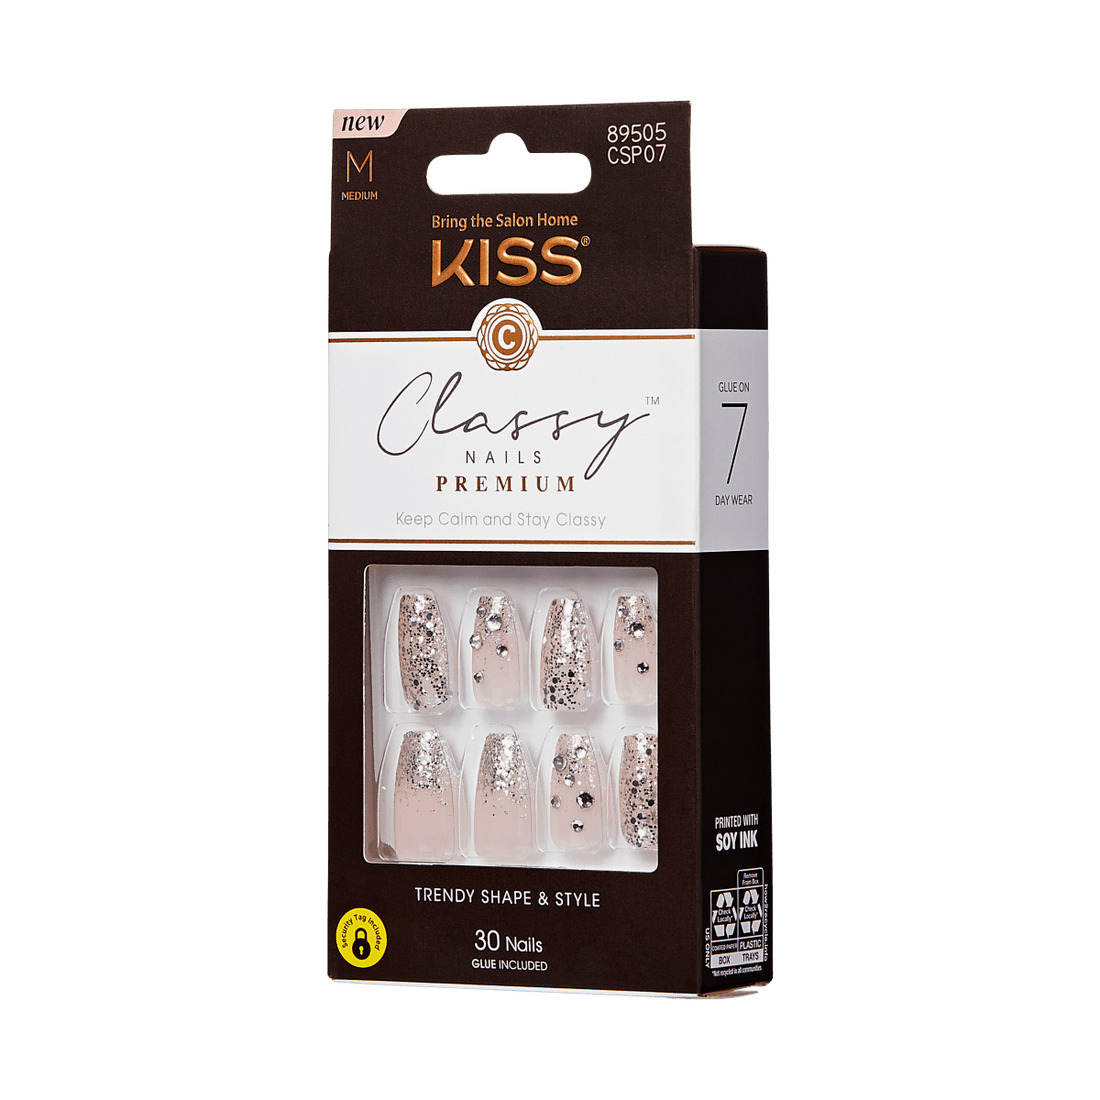 KISS Classy Nails Premium- My Muse